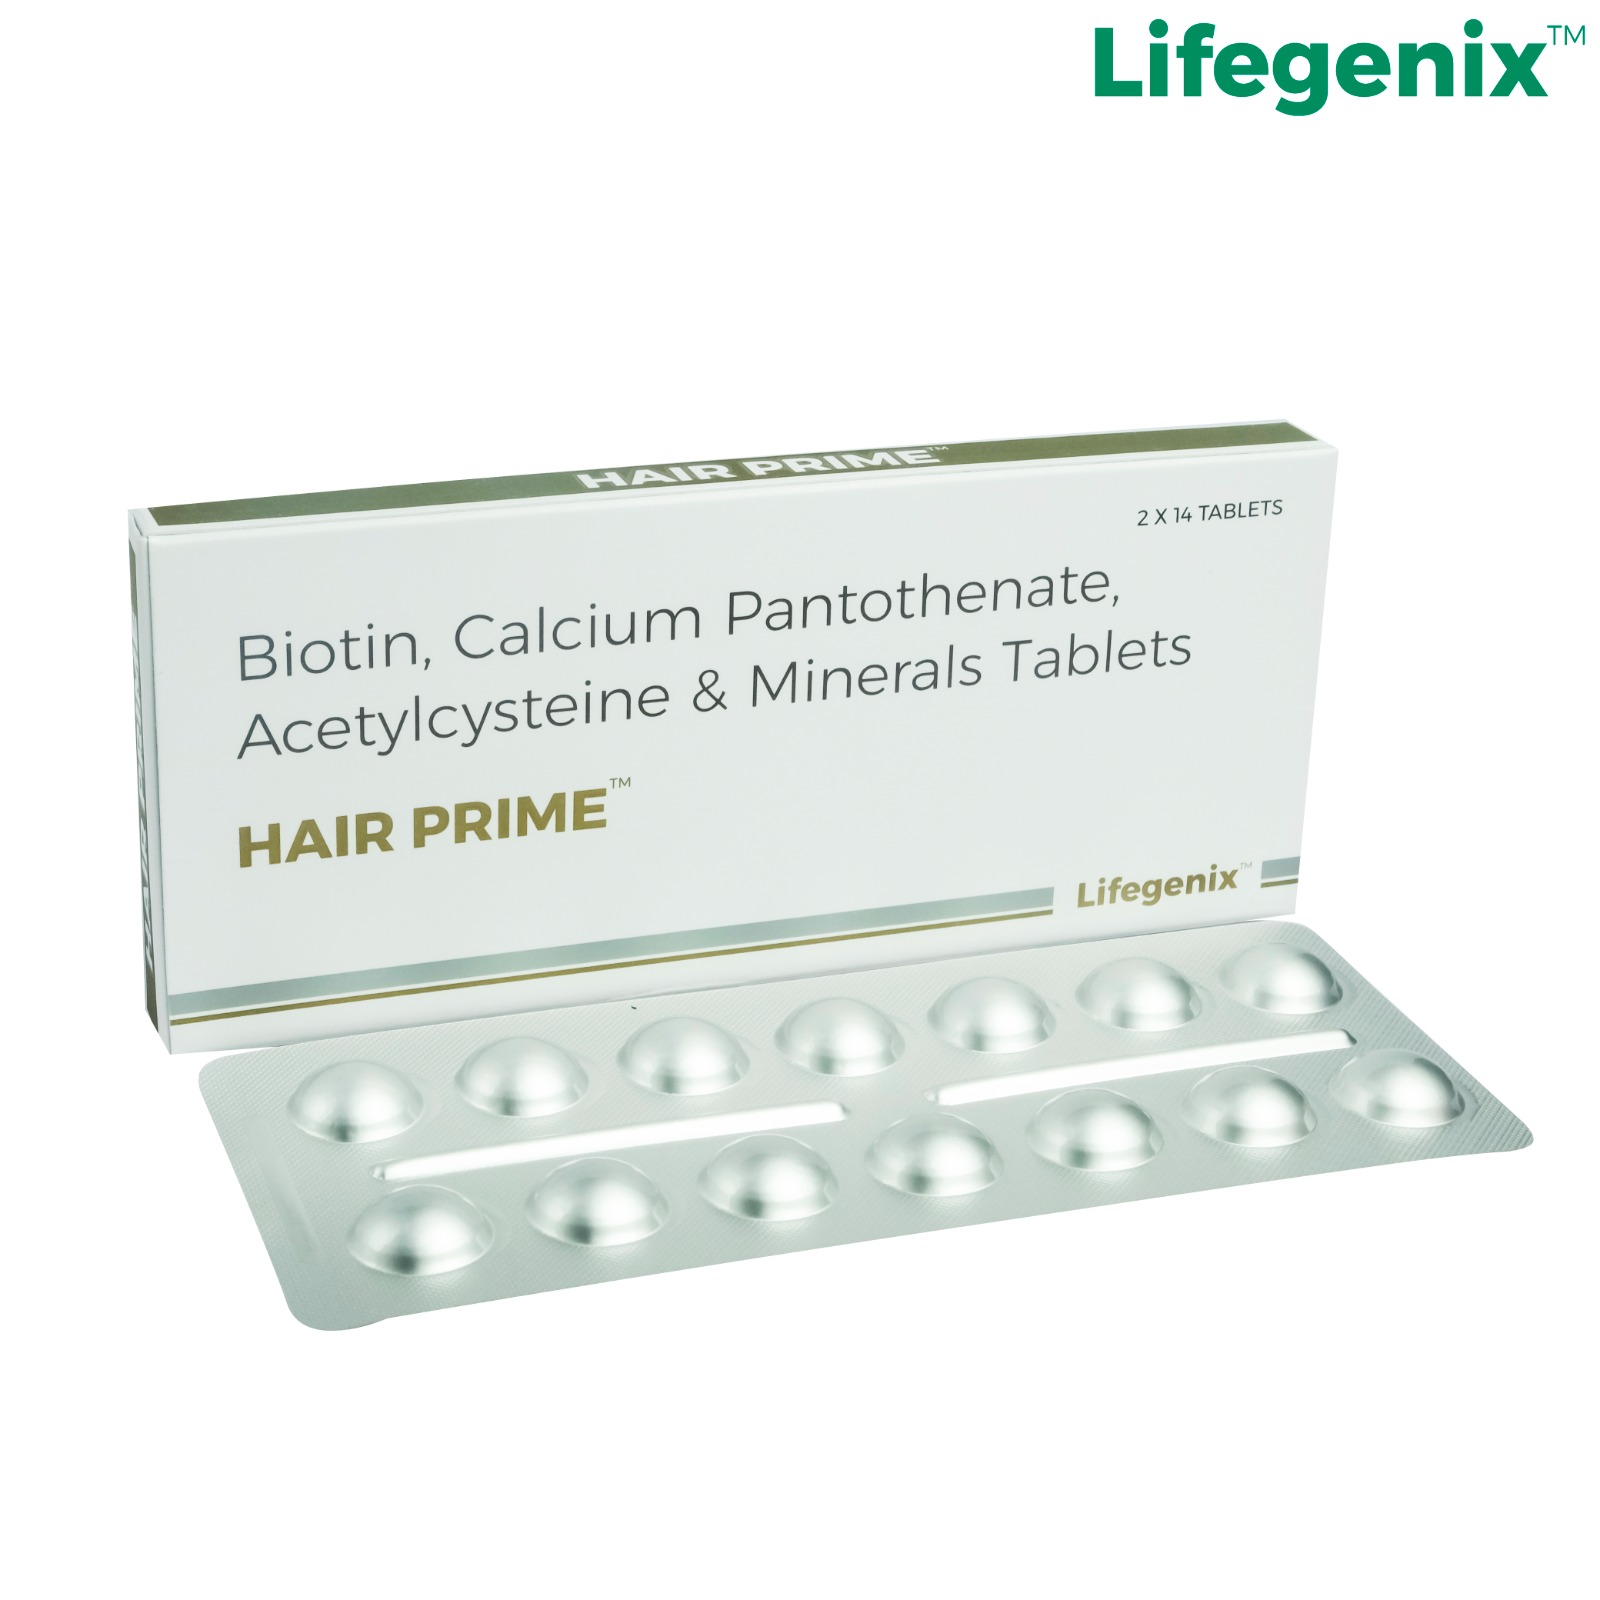 Biotin, Calcium Pantothenate, Acetylcysteine and Minerals Tablets